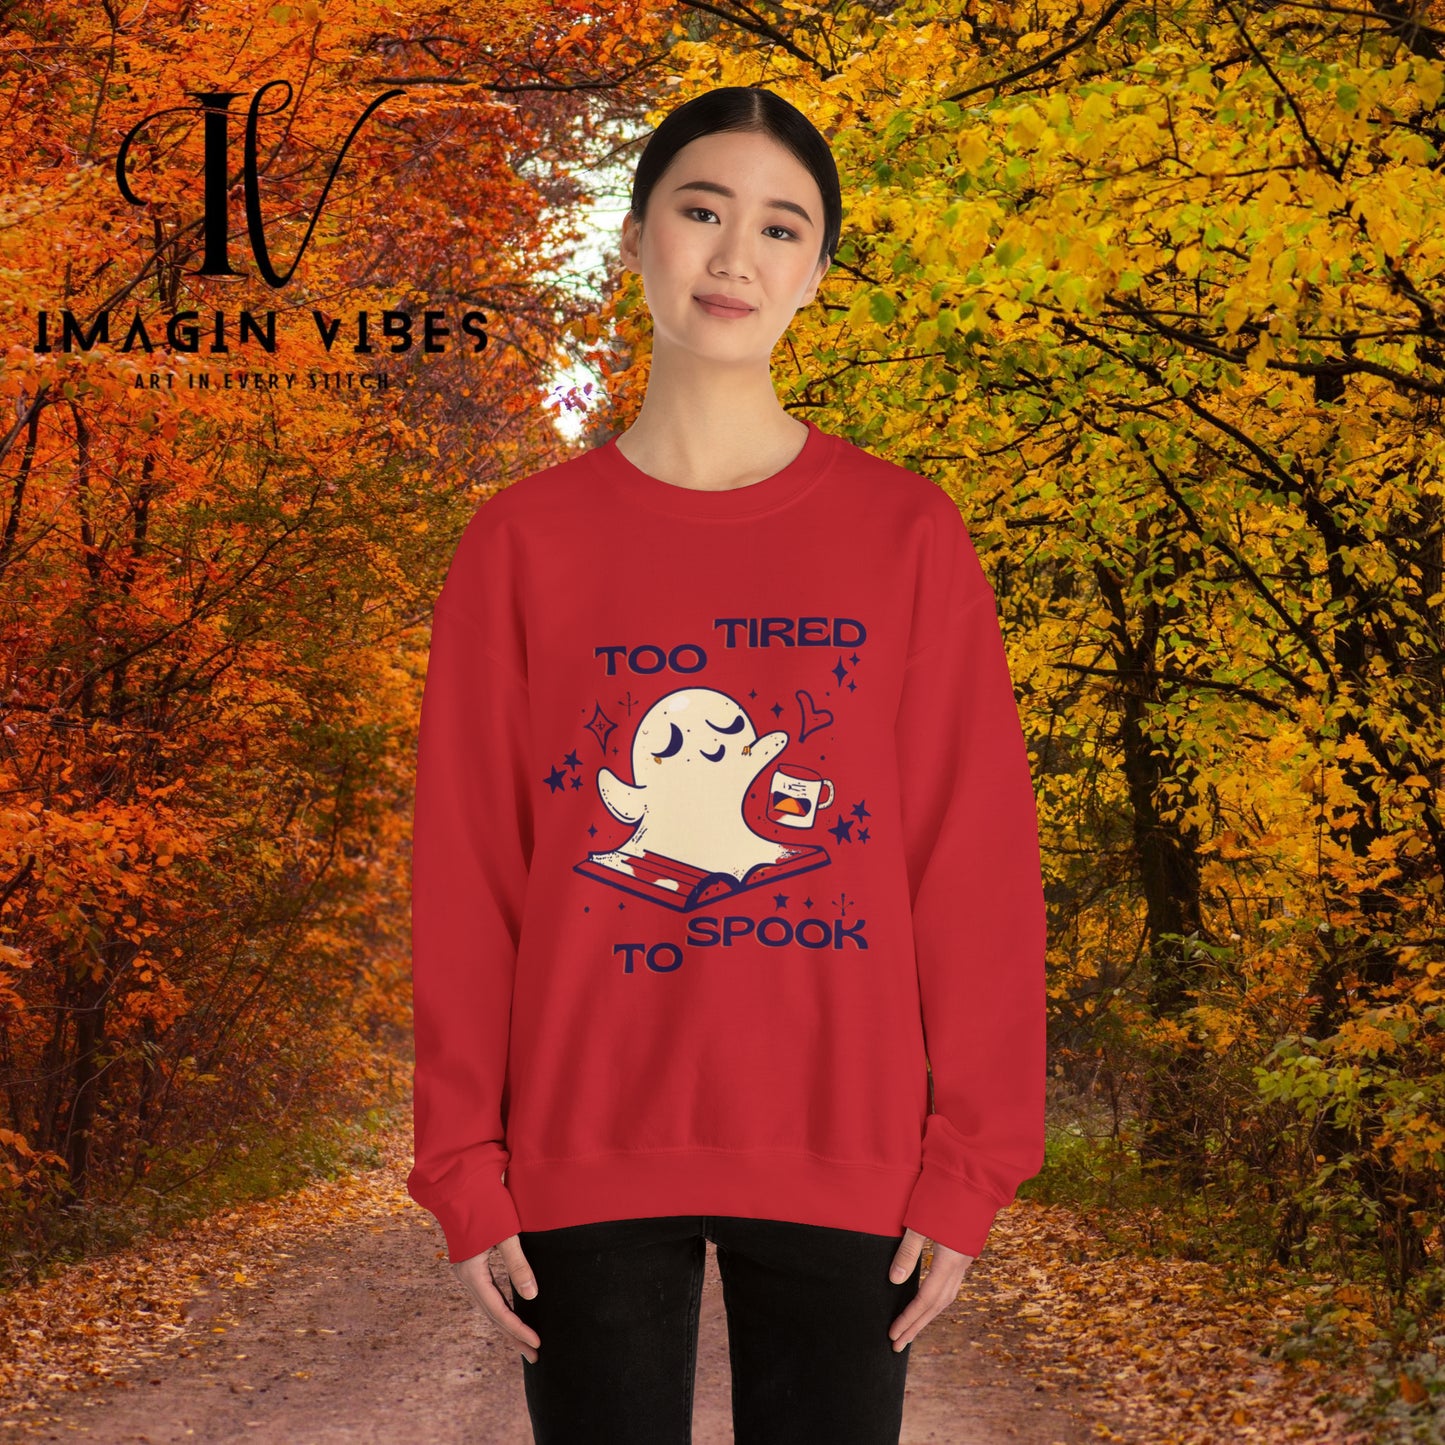 Spooky Literary Spirits: Ghost Reading Books Sweater - Bookish Halloween Sweatshirt for a Hauntingly Stylish Look, Perfect Halloween Teacher Gift and Librarian Halloween Sweatshirt   